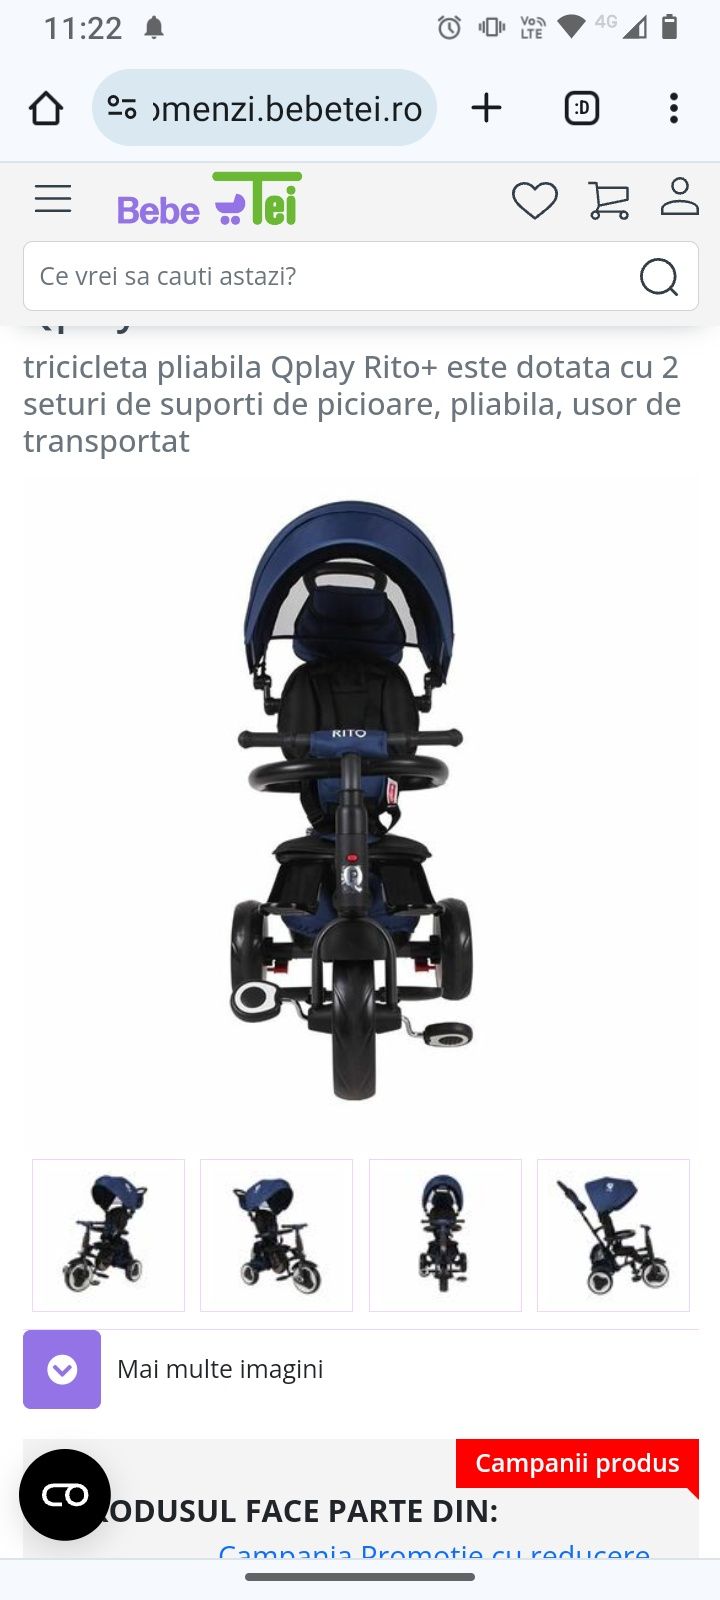 Tricicleta pentru copii Qplay Rito Rubber, pliabila, 12 luni - 3 ani -